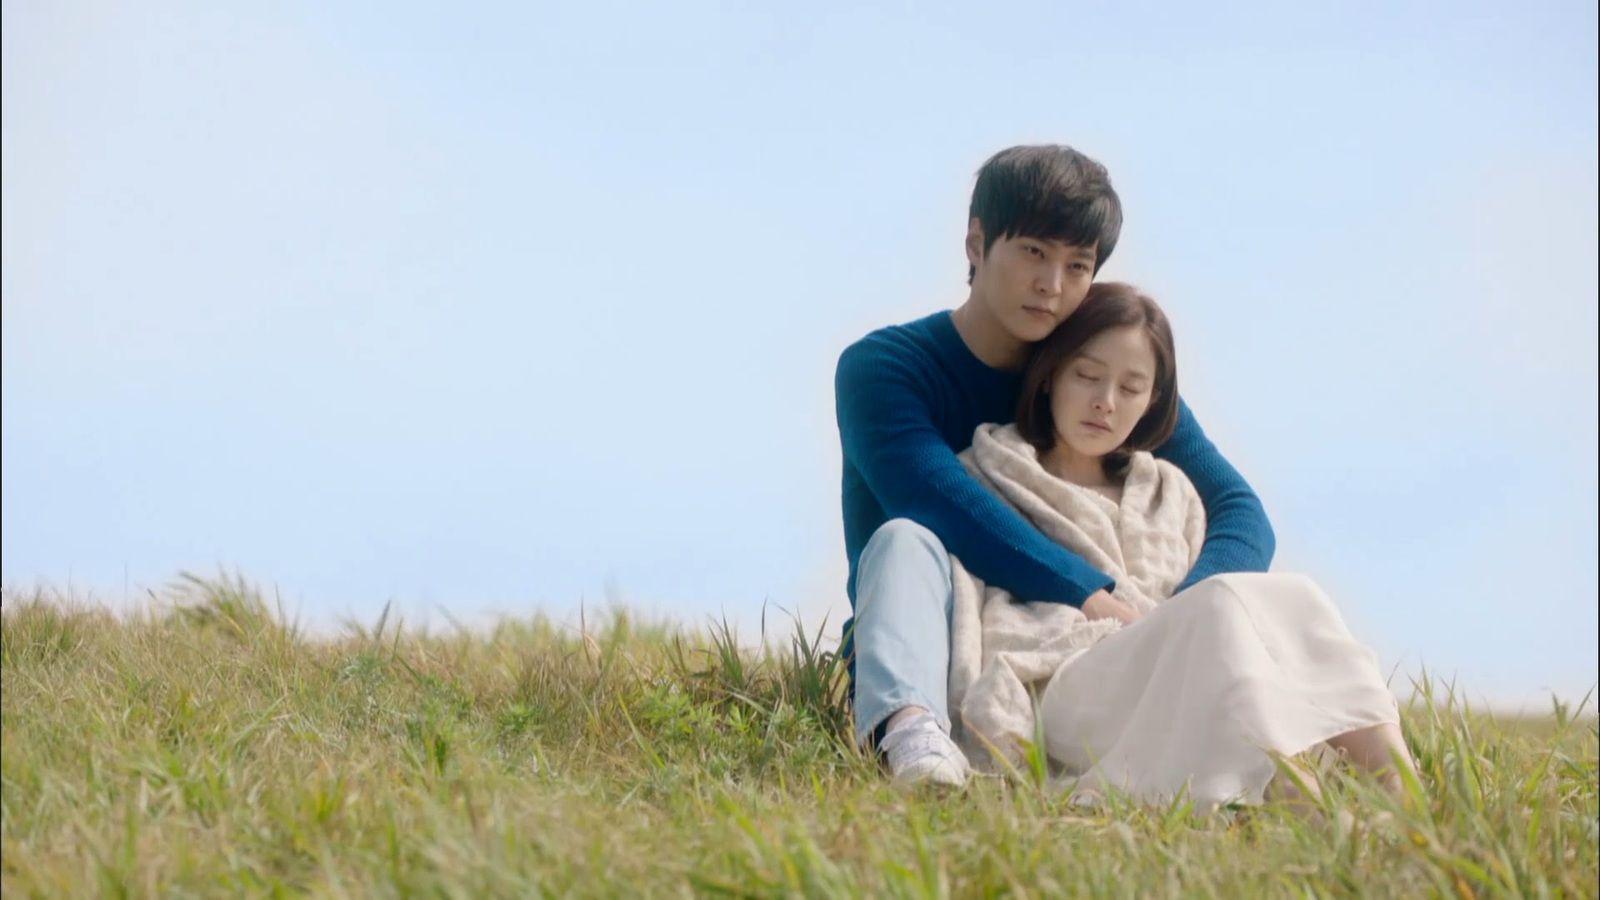 31 Best Medical Korean Drama Series To Watch